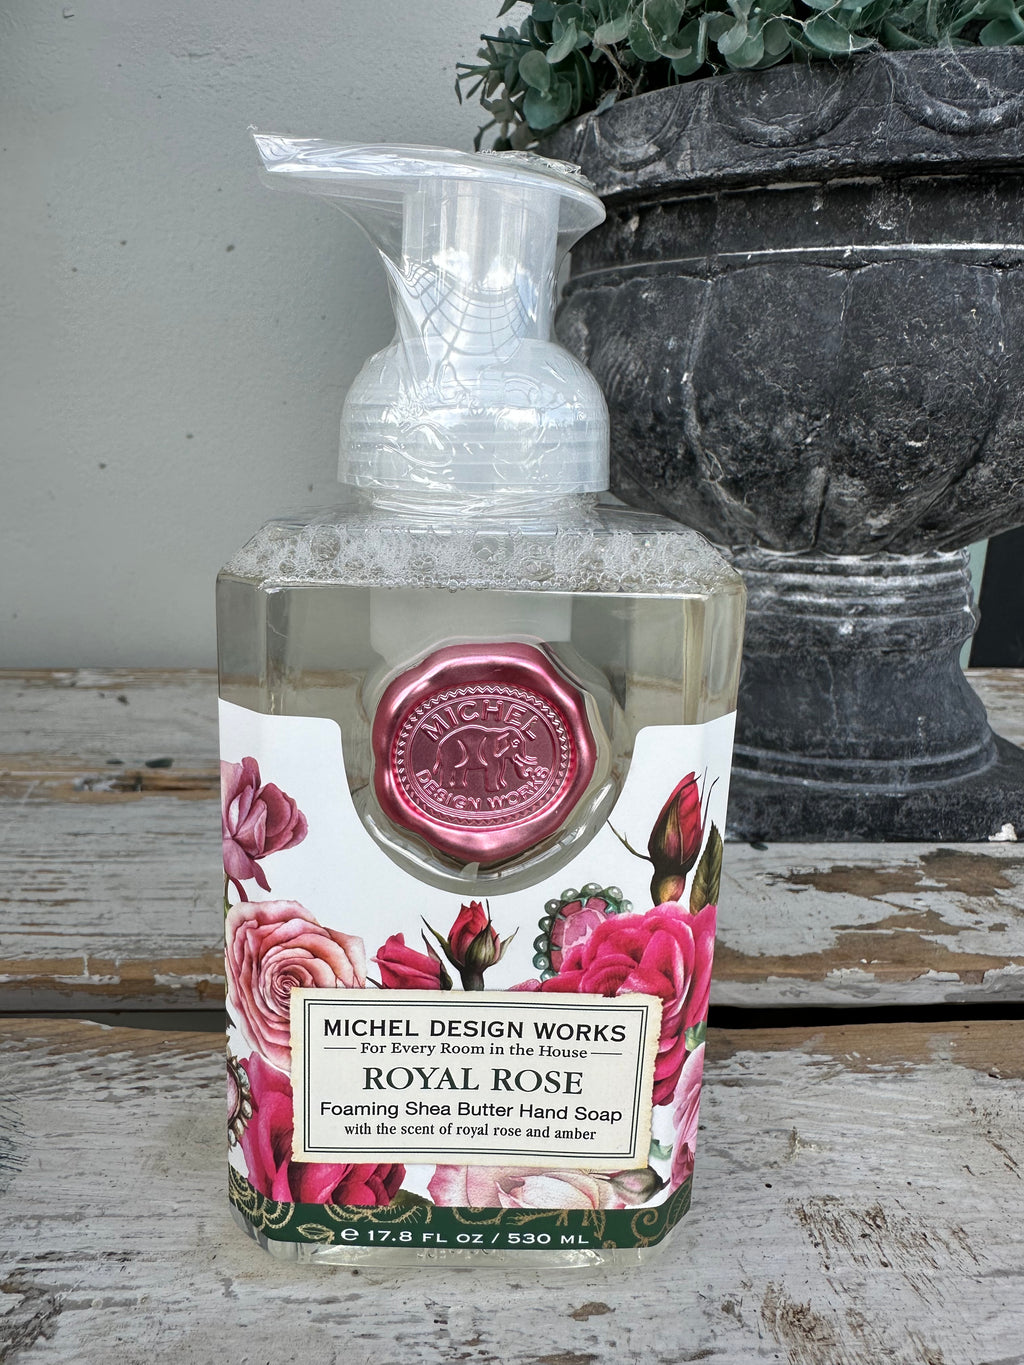 Foaming Soap Royal Rose by michel design works